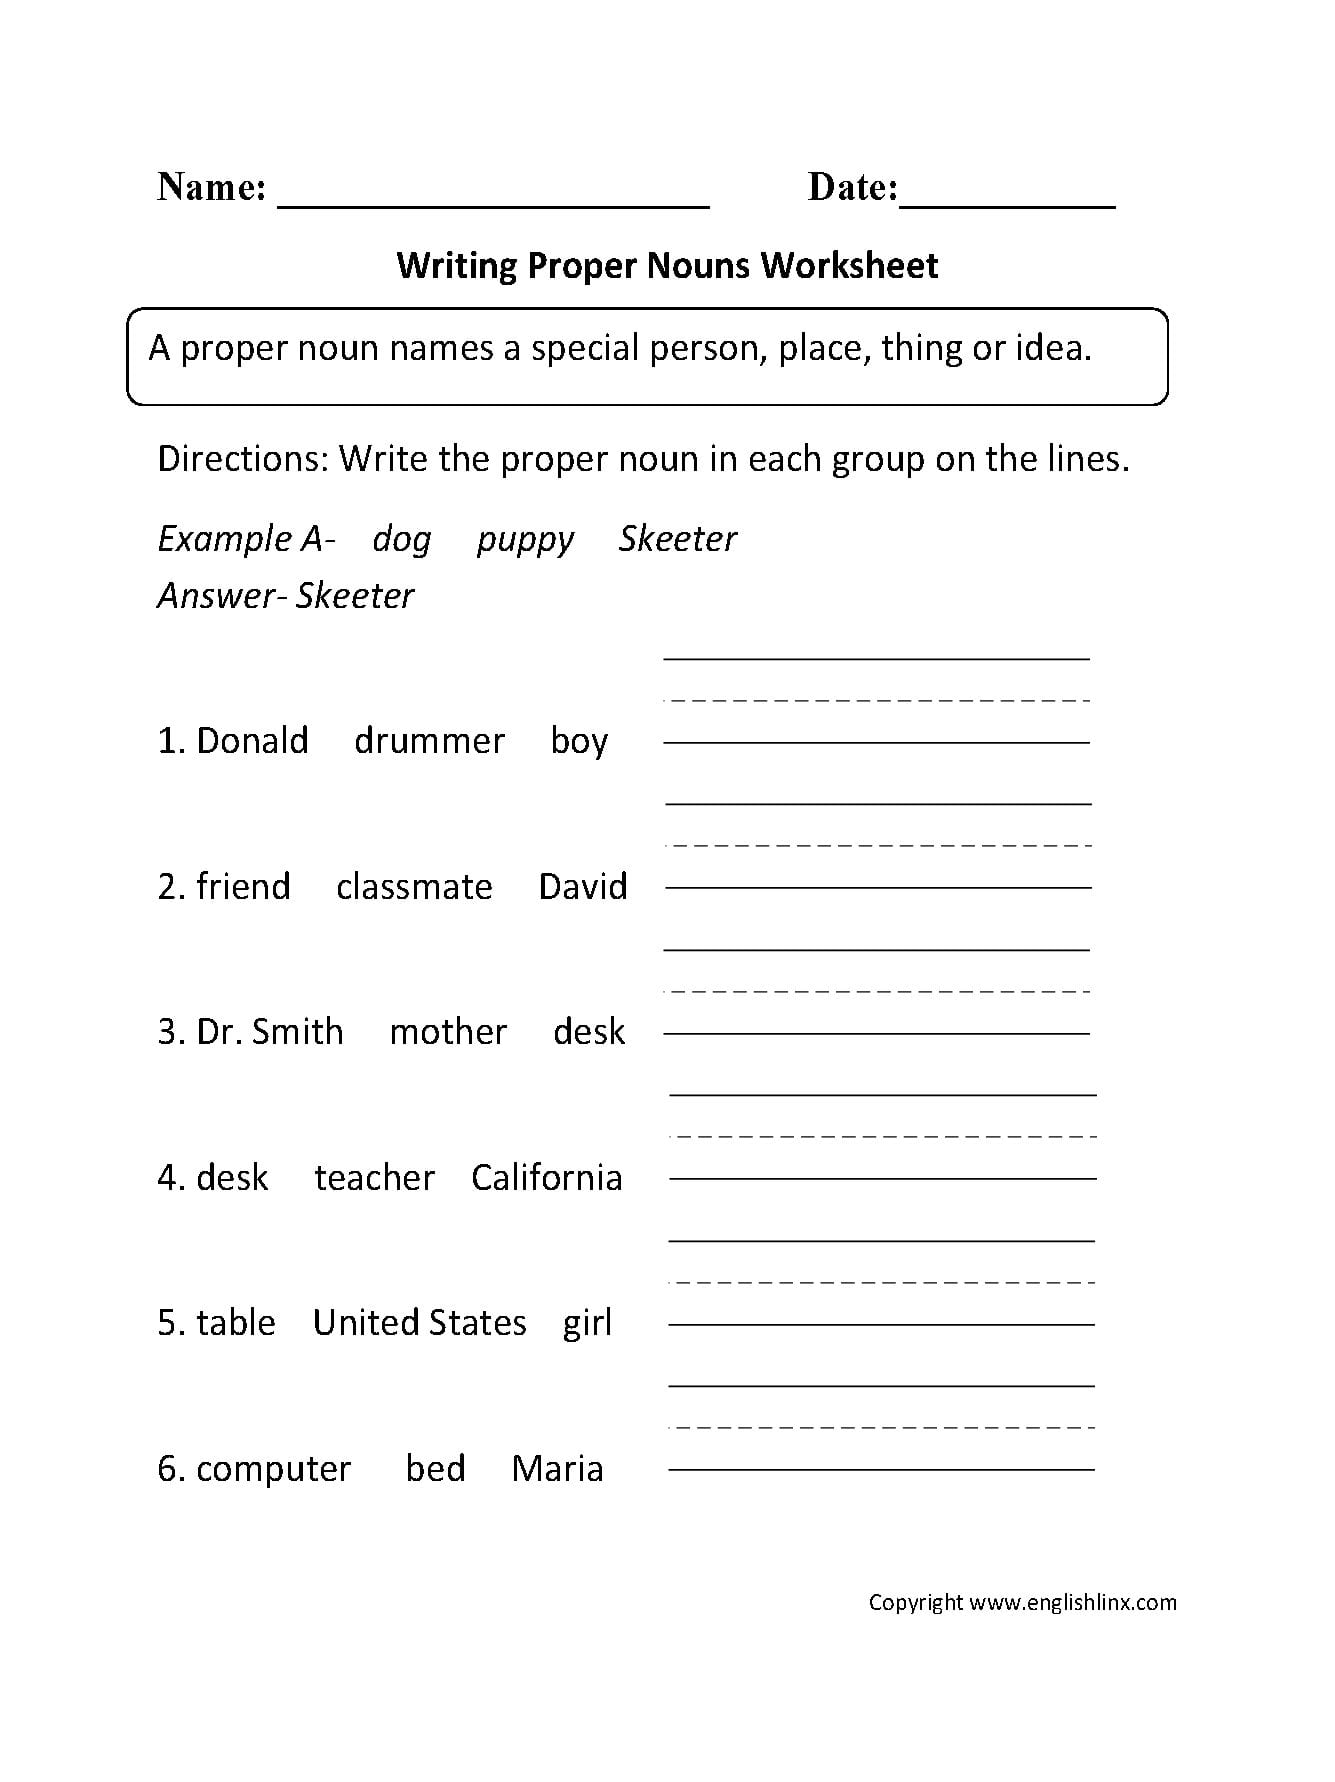 nouns-worksheet-3rd-grade-db-excel